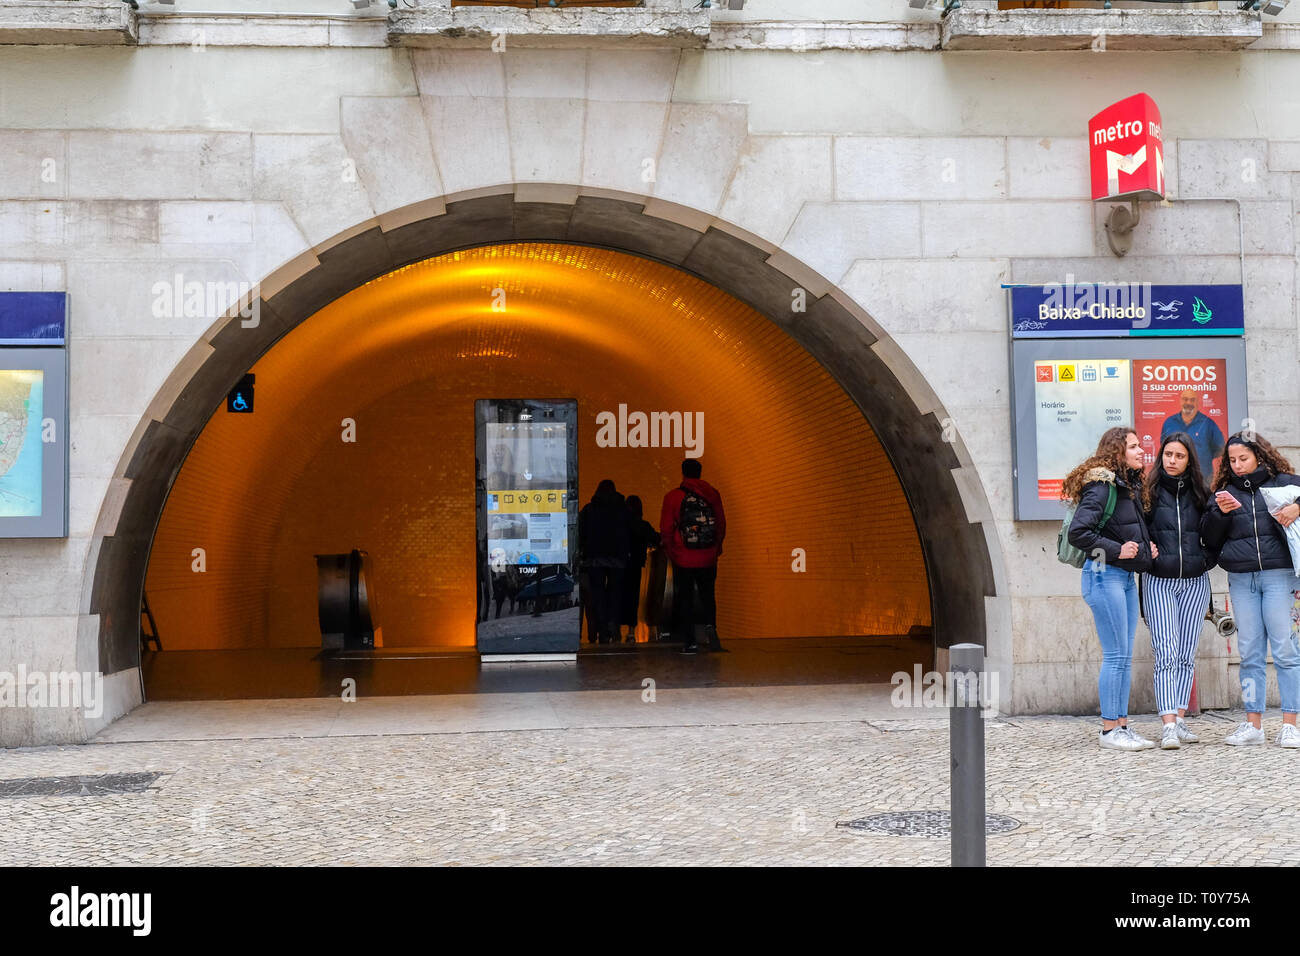 Baixa-Chiado metro station, Lisbon, Portugal. February 2019. Stock Photo